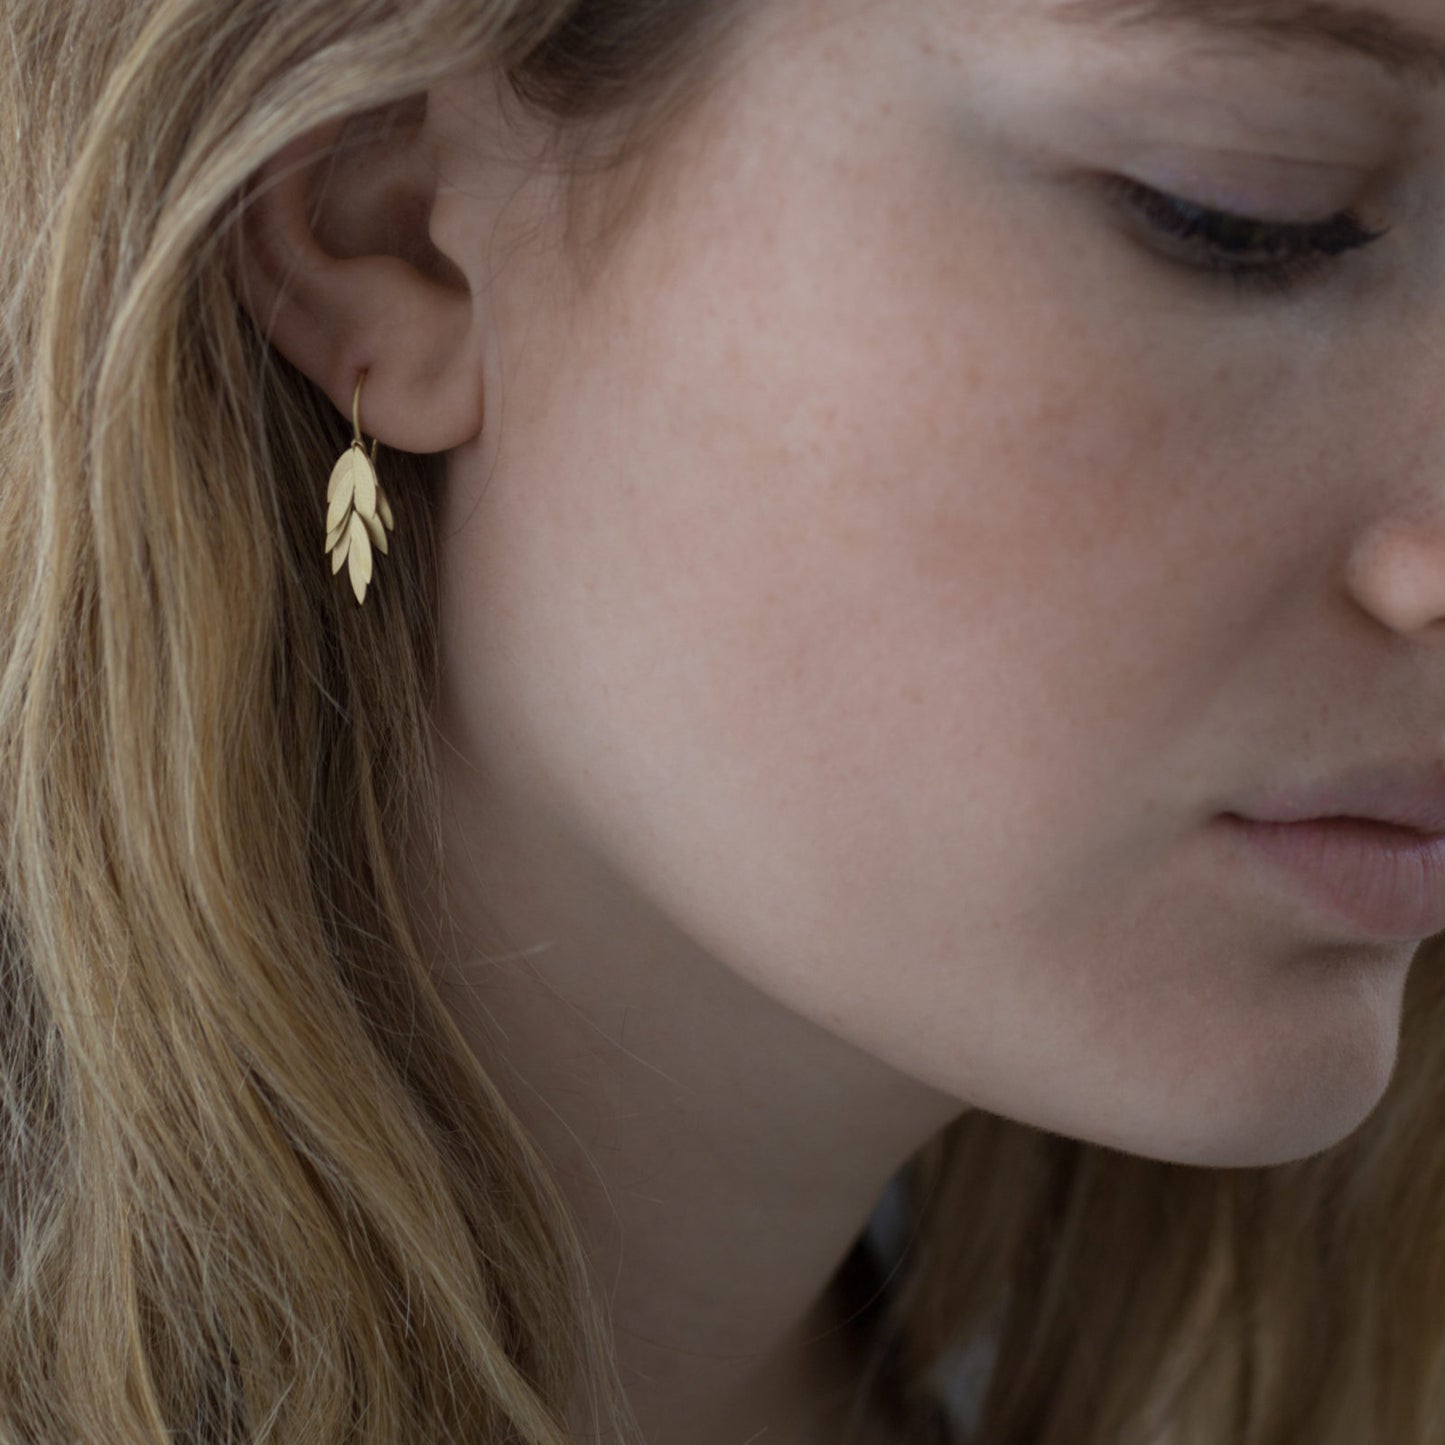 Sia Taylor 18K Small Golden Leaf Earrings